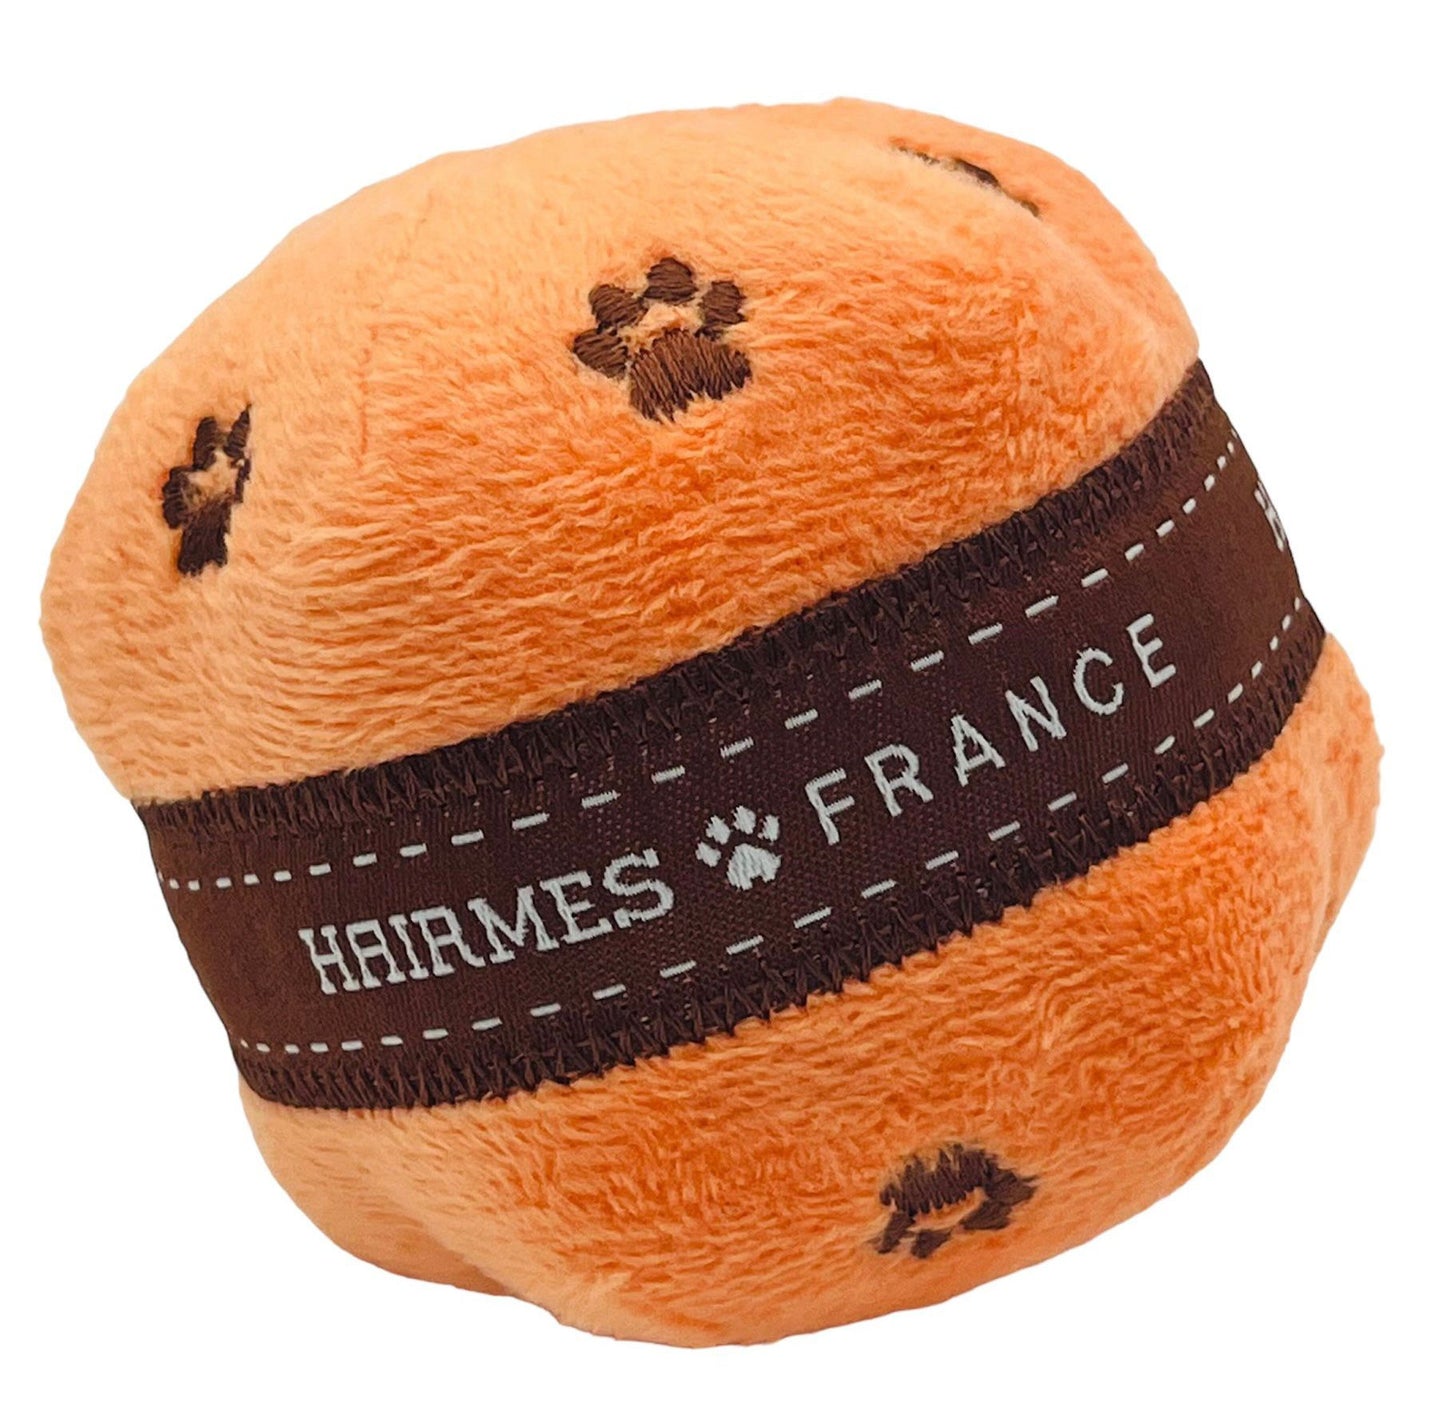 Hairmes Orange Ball Toy